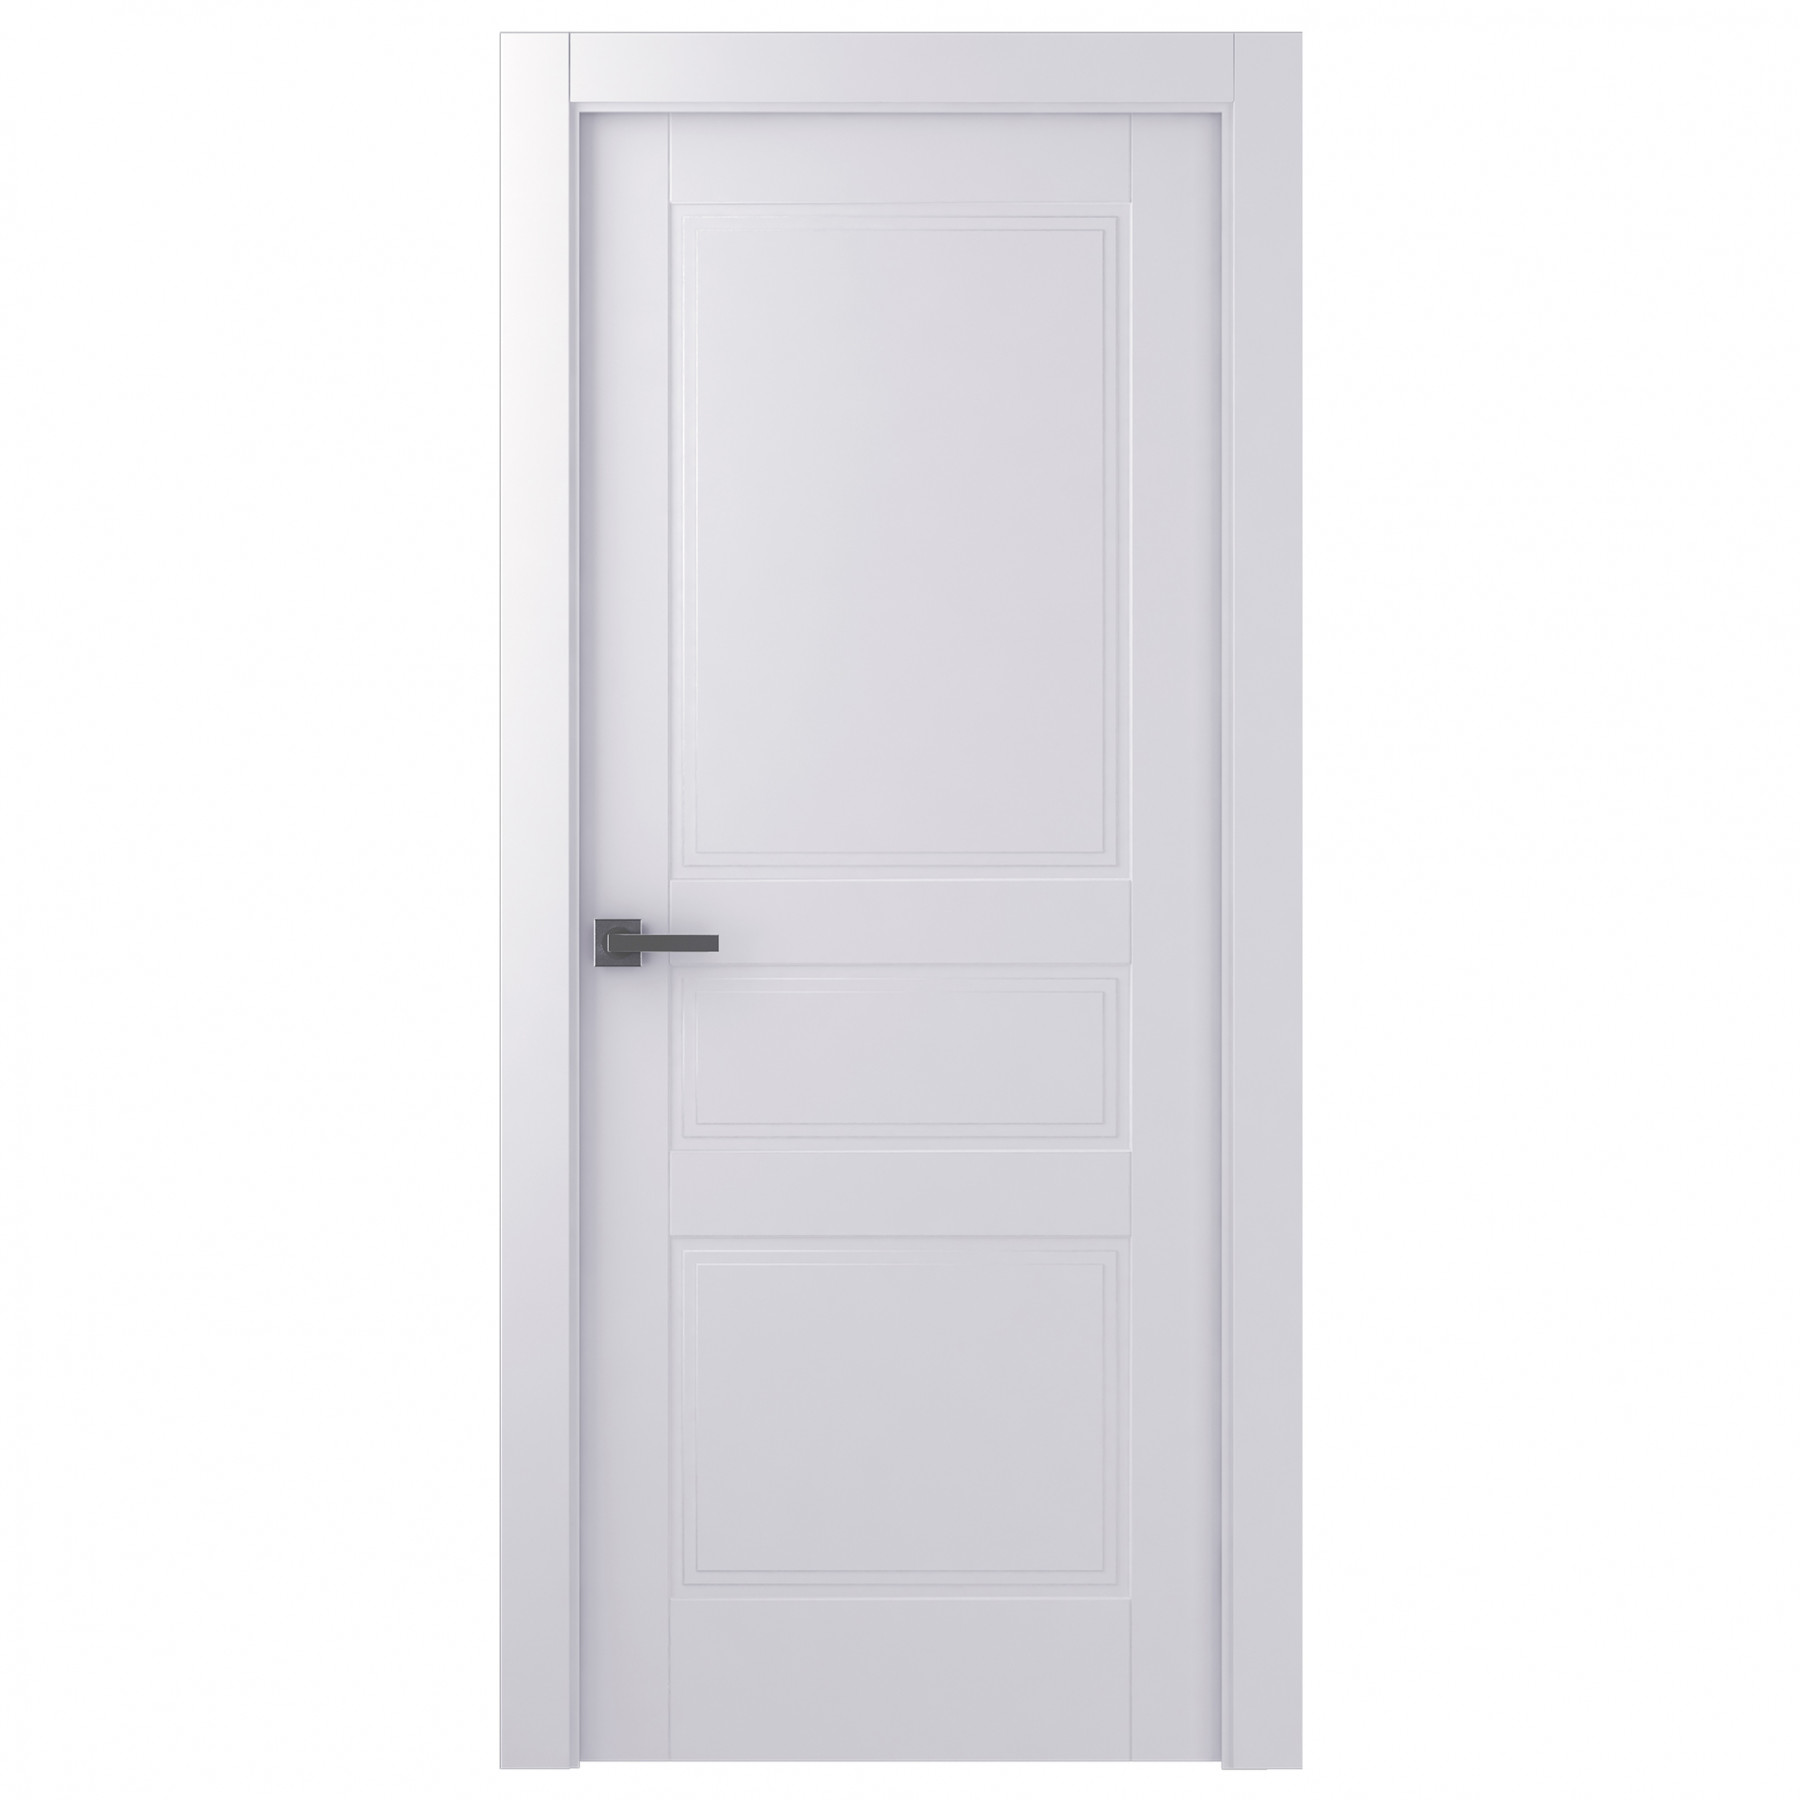 Купить Дверь межкомнатная глухая Belwooddoors Инари 600х2000 мм белая